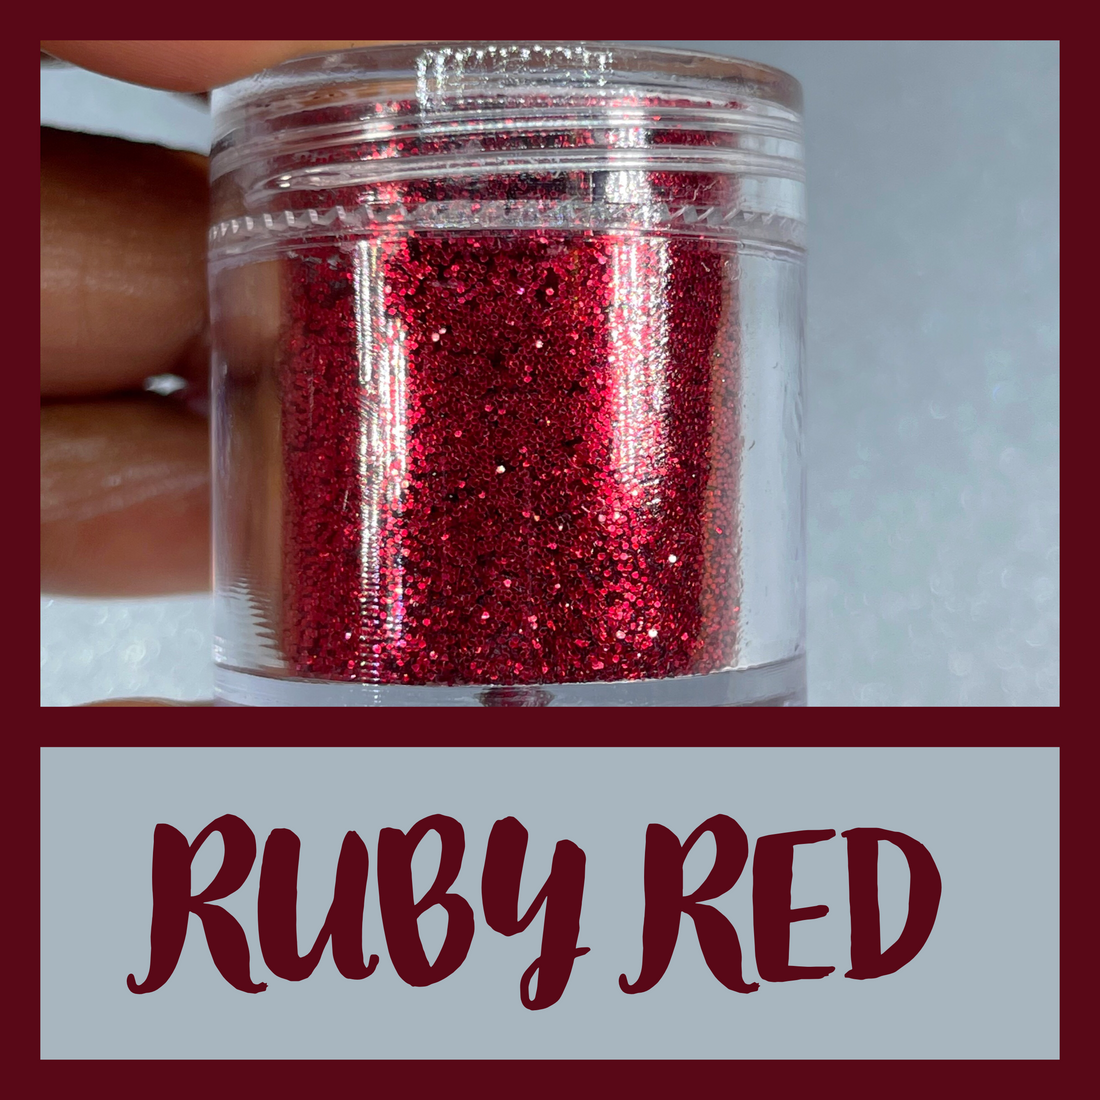 Victorian Red :Ultra Fine Glitter Metallic (glitter sold in jars - four  sizes)